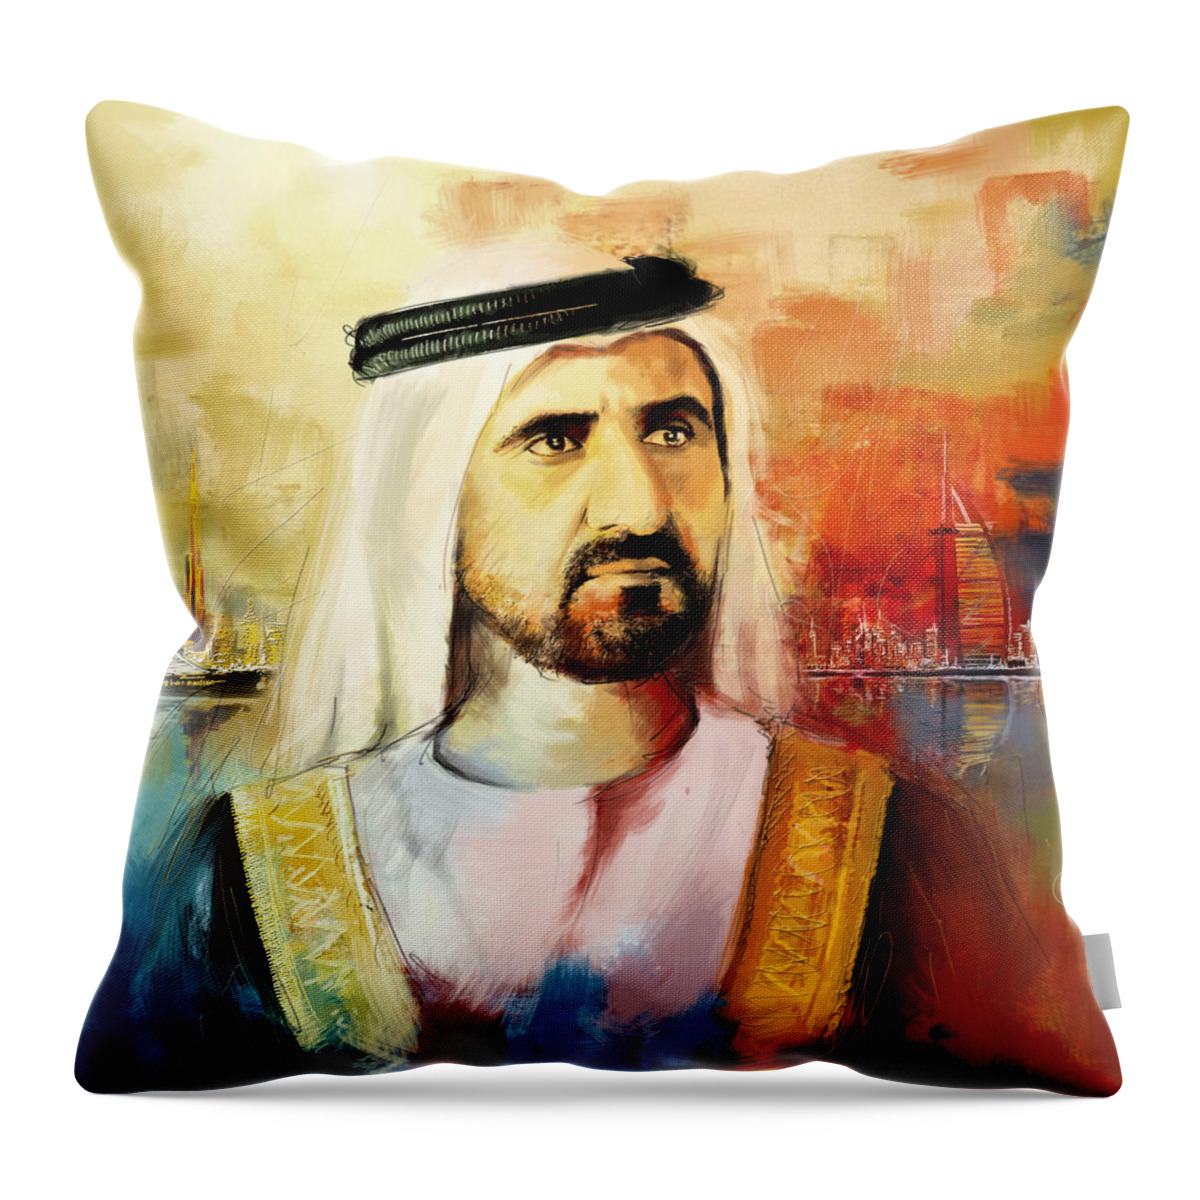 Sheik Mohammed Bin Rashid Al Maktoum Throw Pillow featuring the painting Sheikh Mohammed bin Rashid Al Maktoum by Corporate Art Task Force